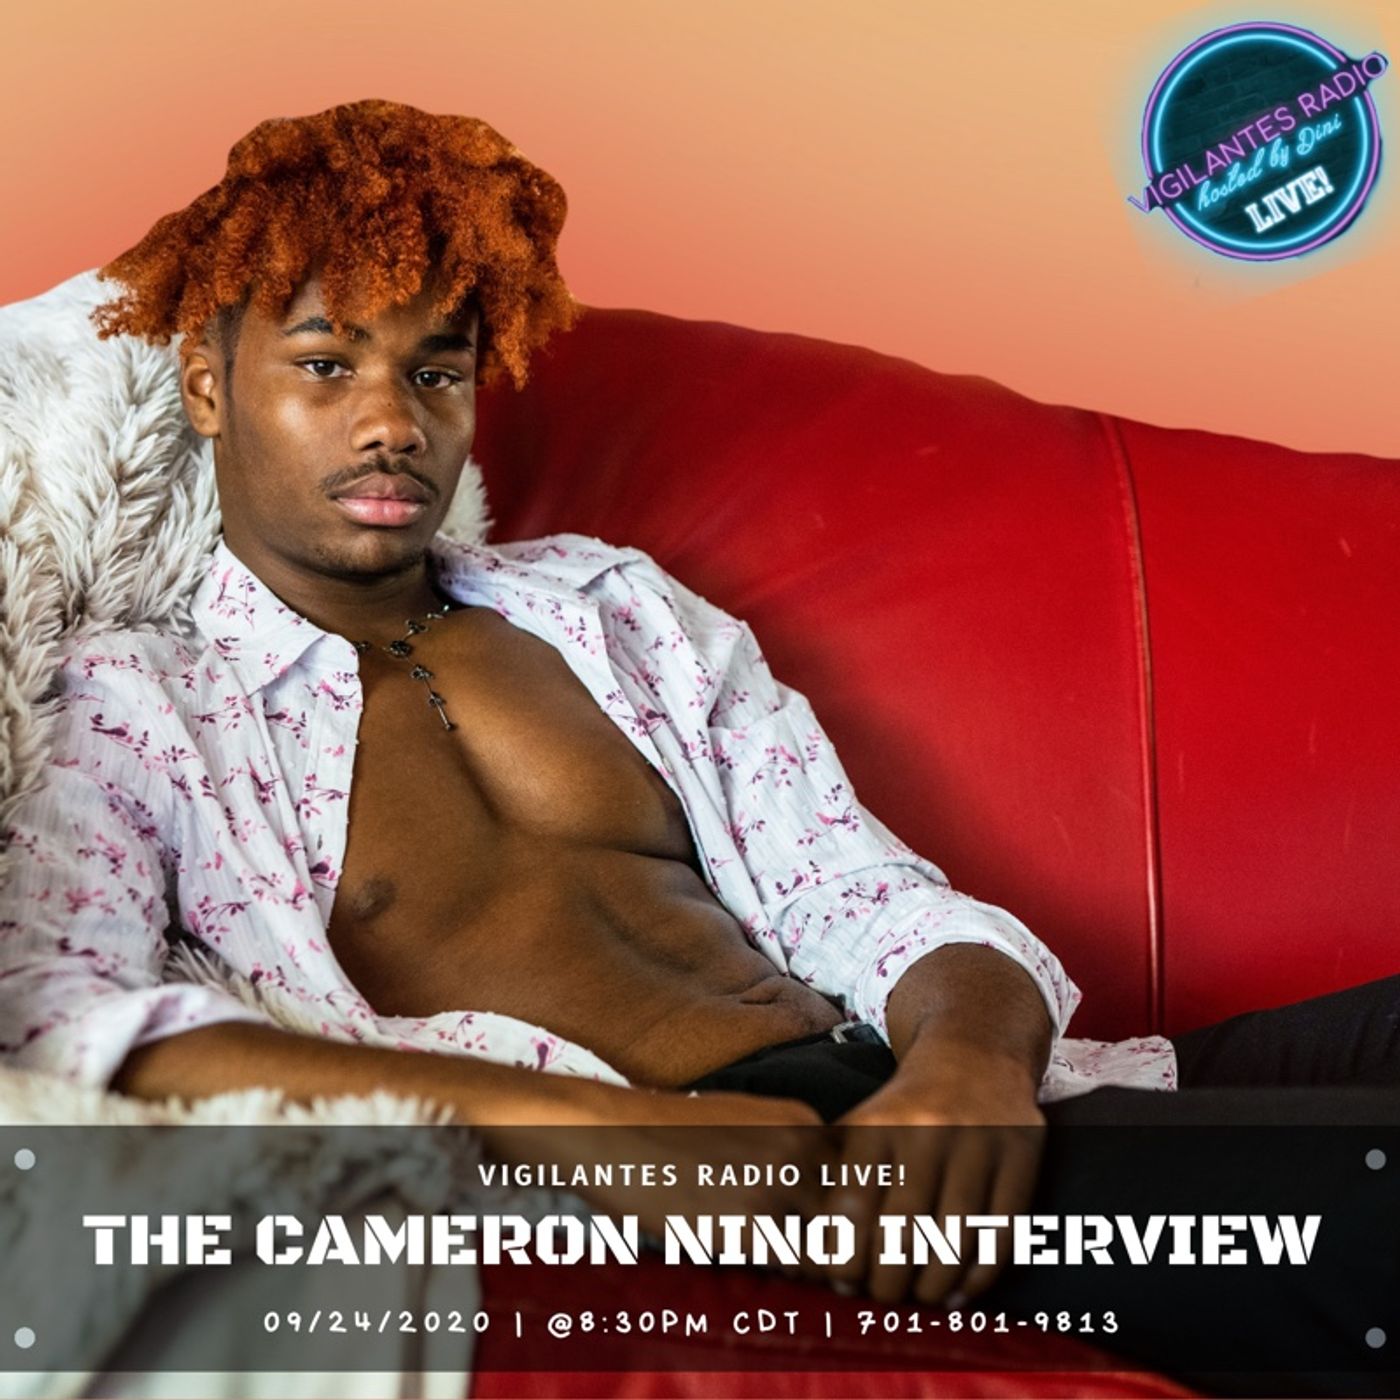 The Cameron Nino Interview. Image